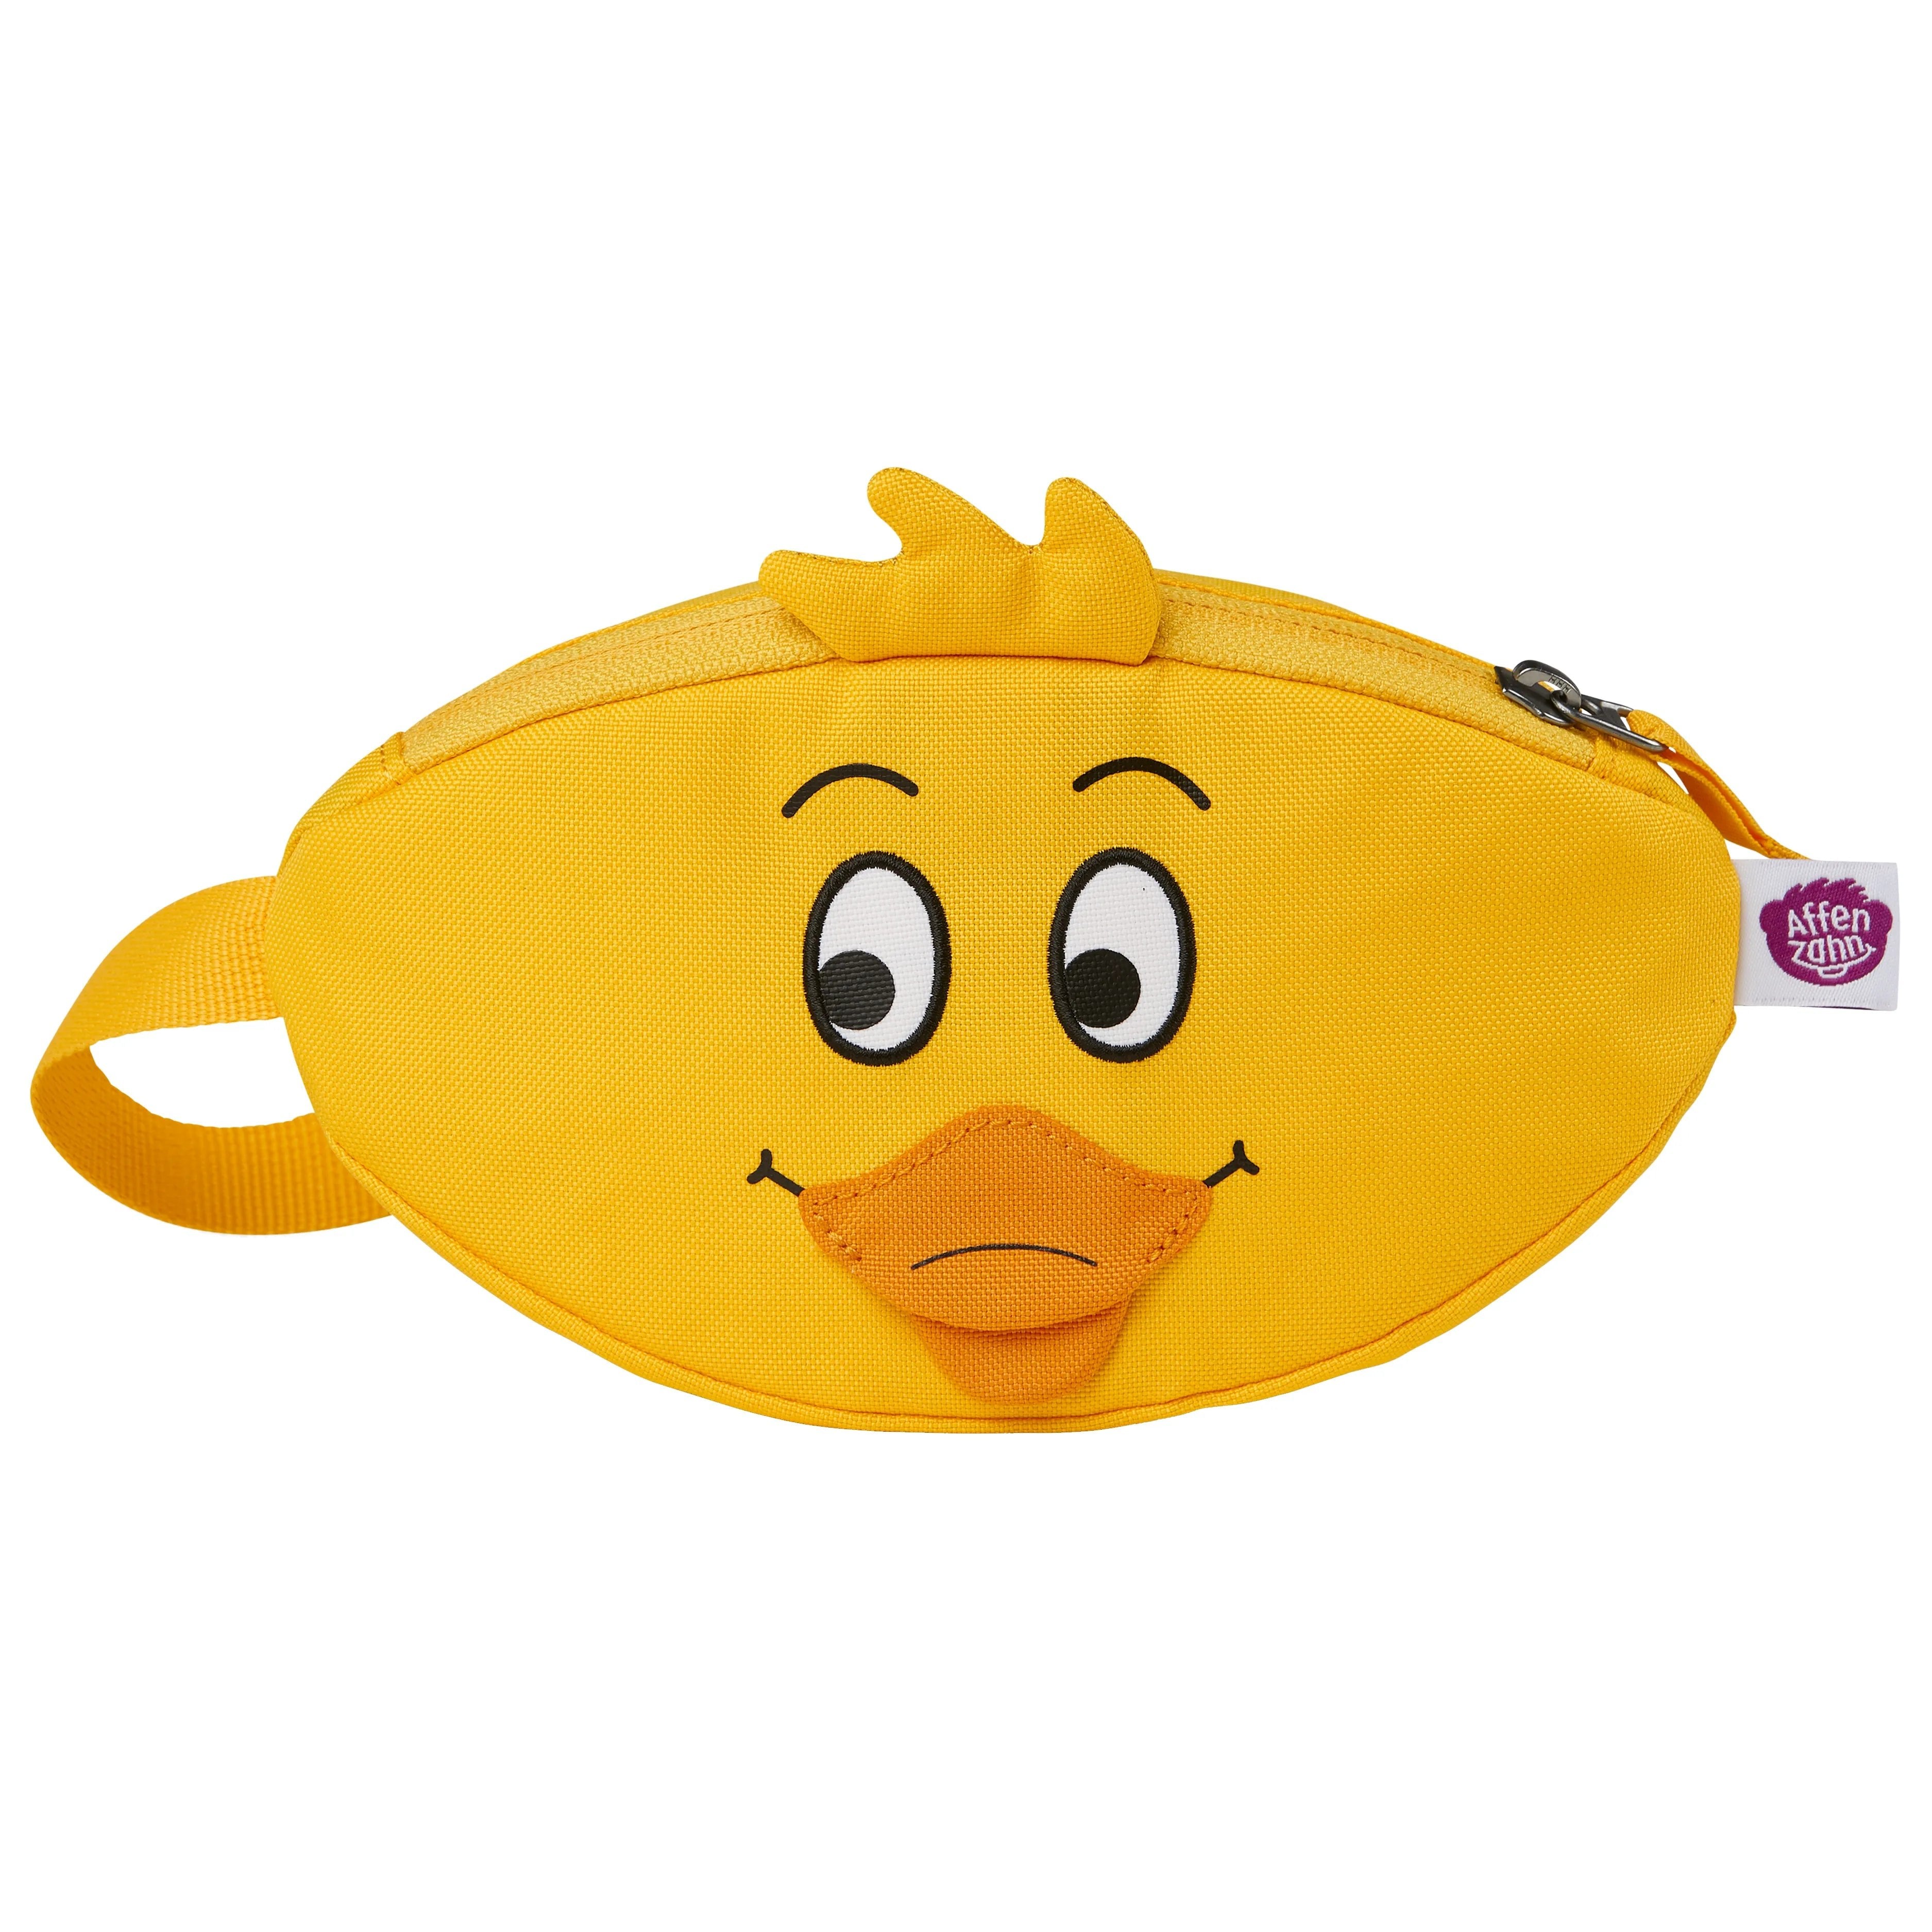 Affenzahn hip bag sac banane pour enfants 22 cm - Canard WDR